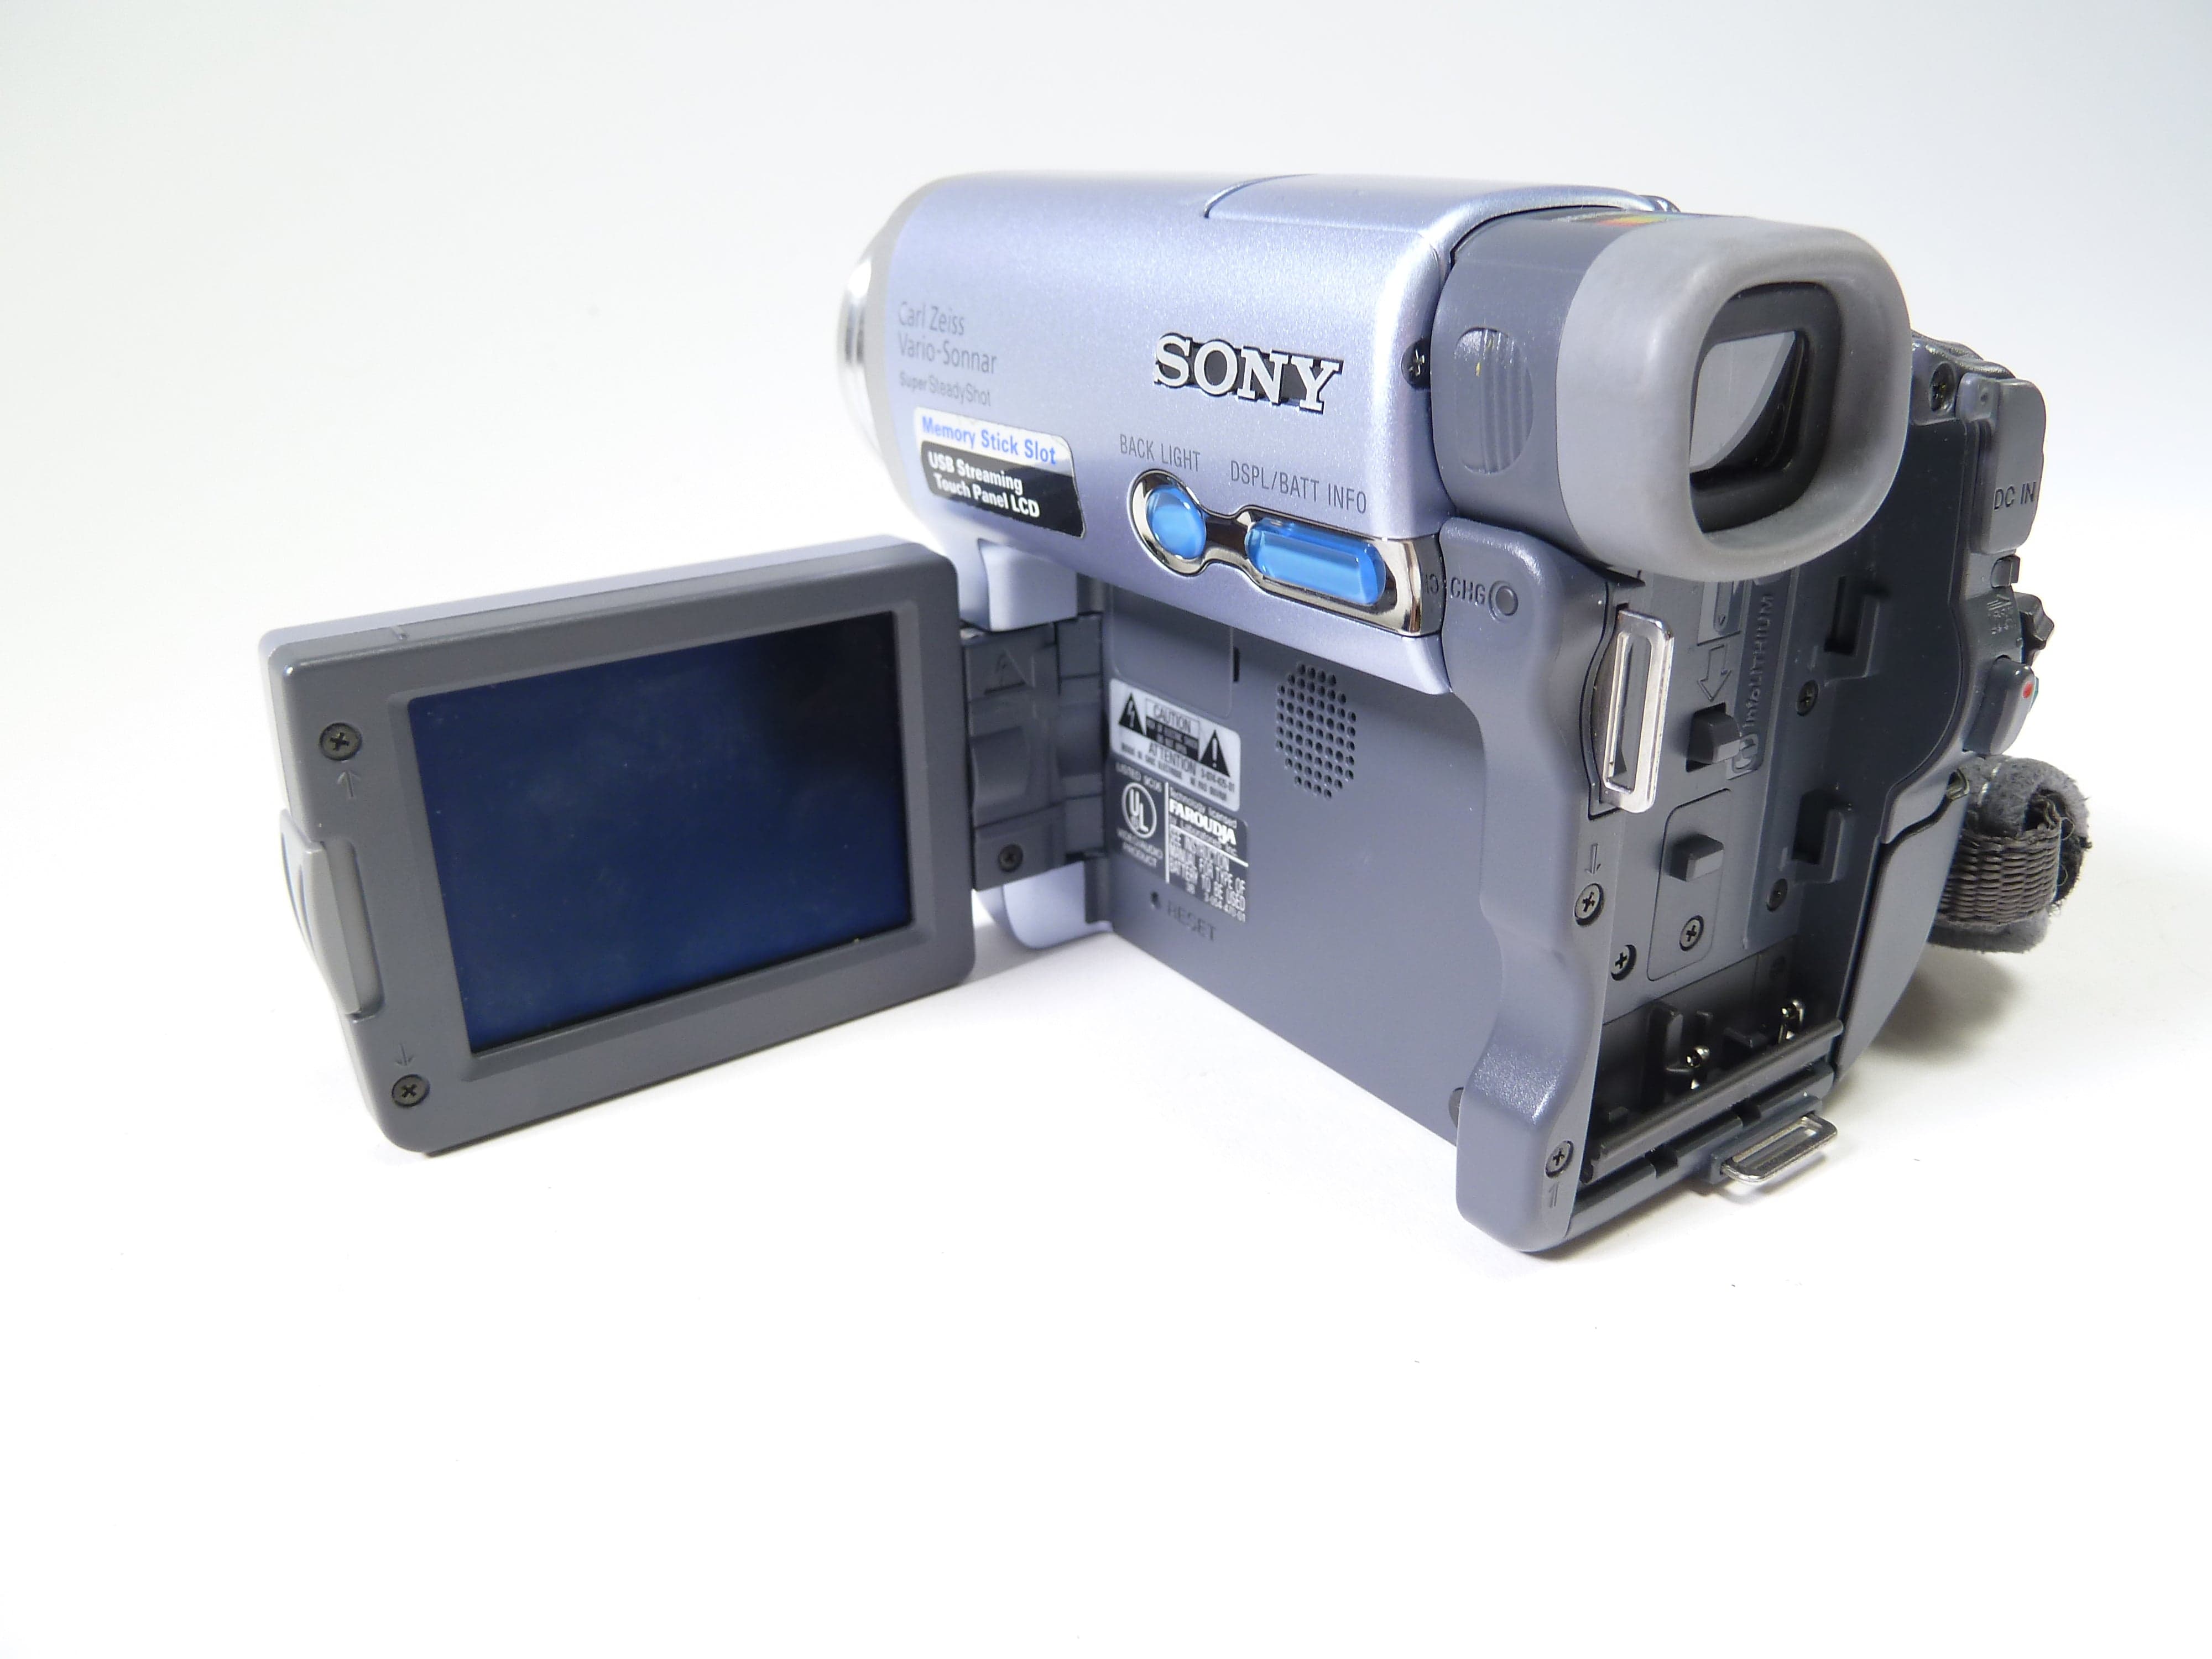 Sony DCR-TRV22 Carl Zeiss Vario-Sonnar Mini DV Camcorder